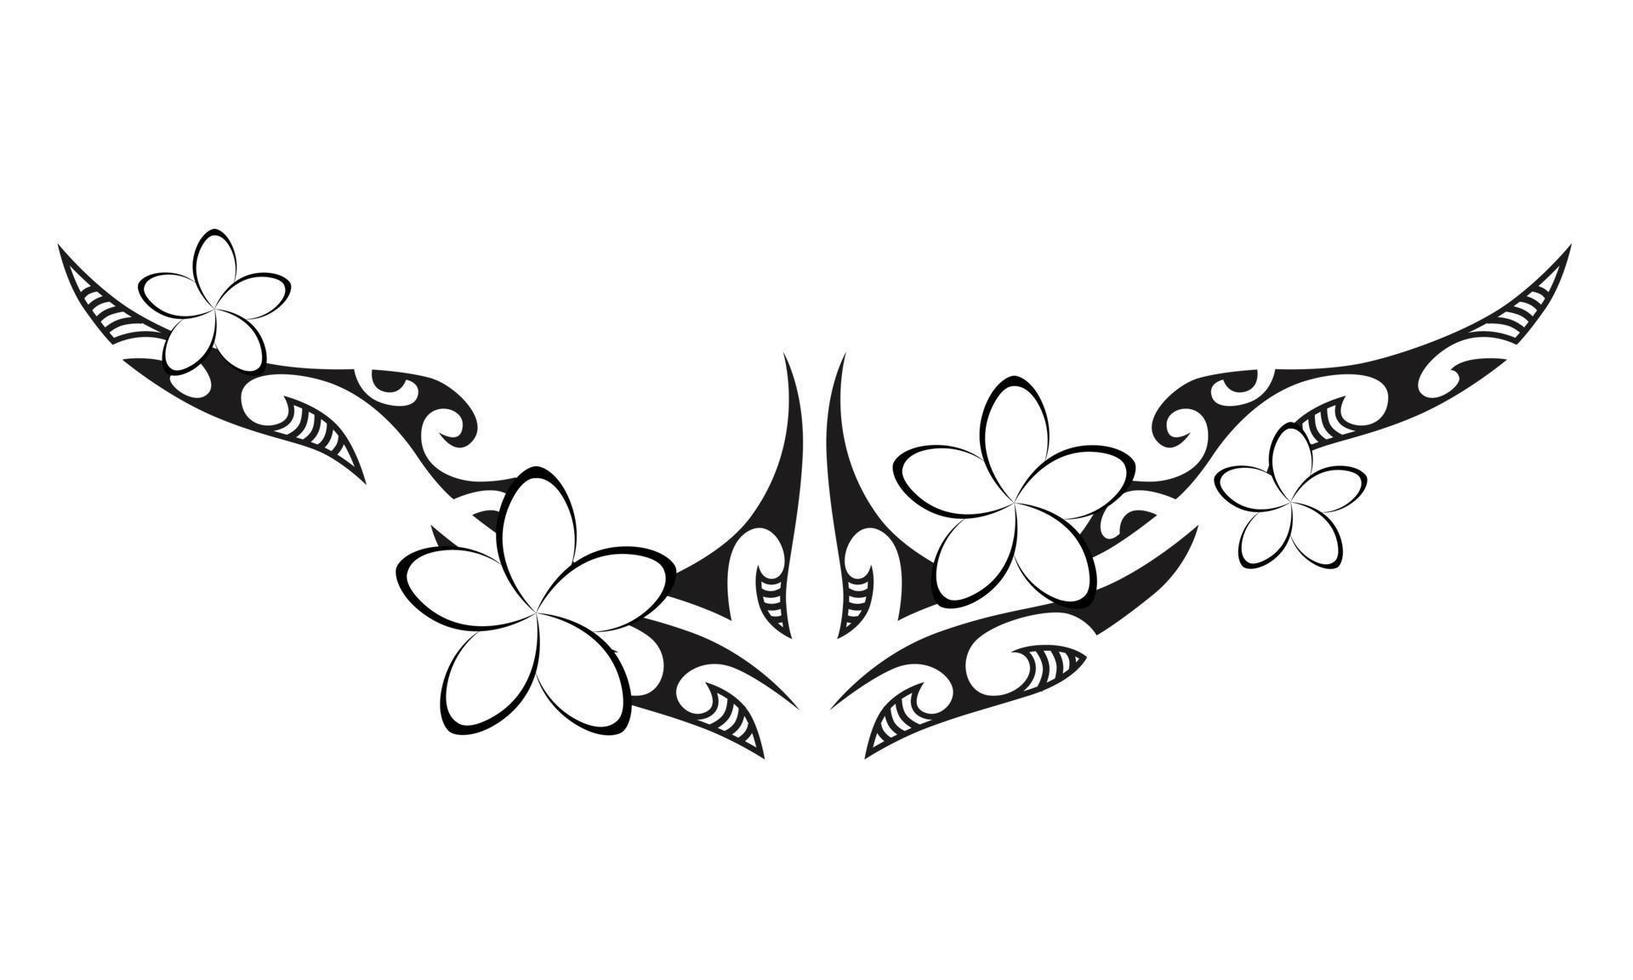 tatuagem estilo maori. ornamento oriental decorativo étnico com flores de plumeria frangipani. vetor